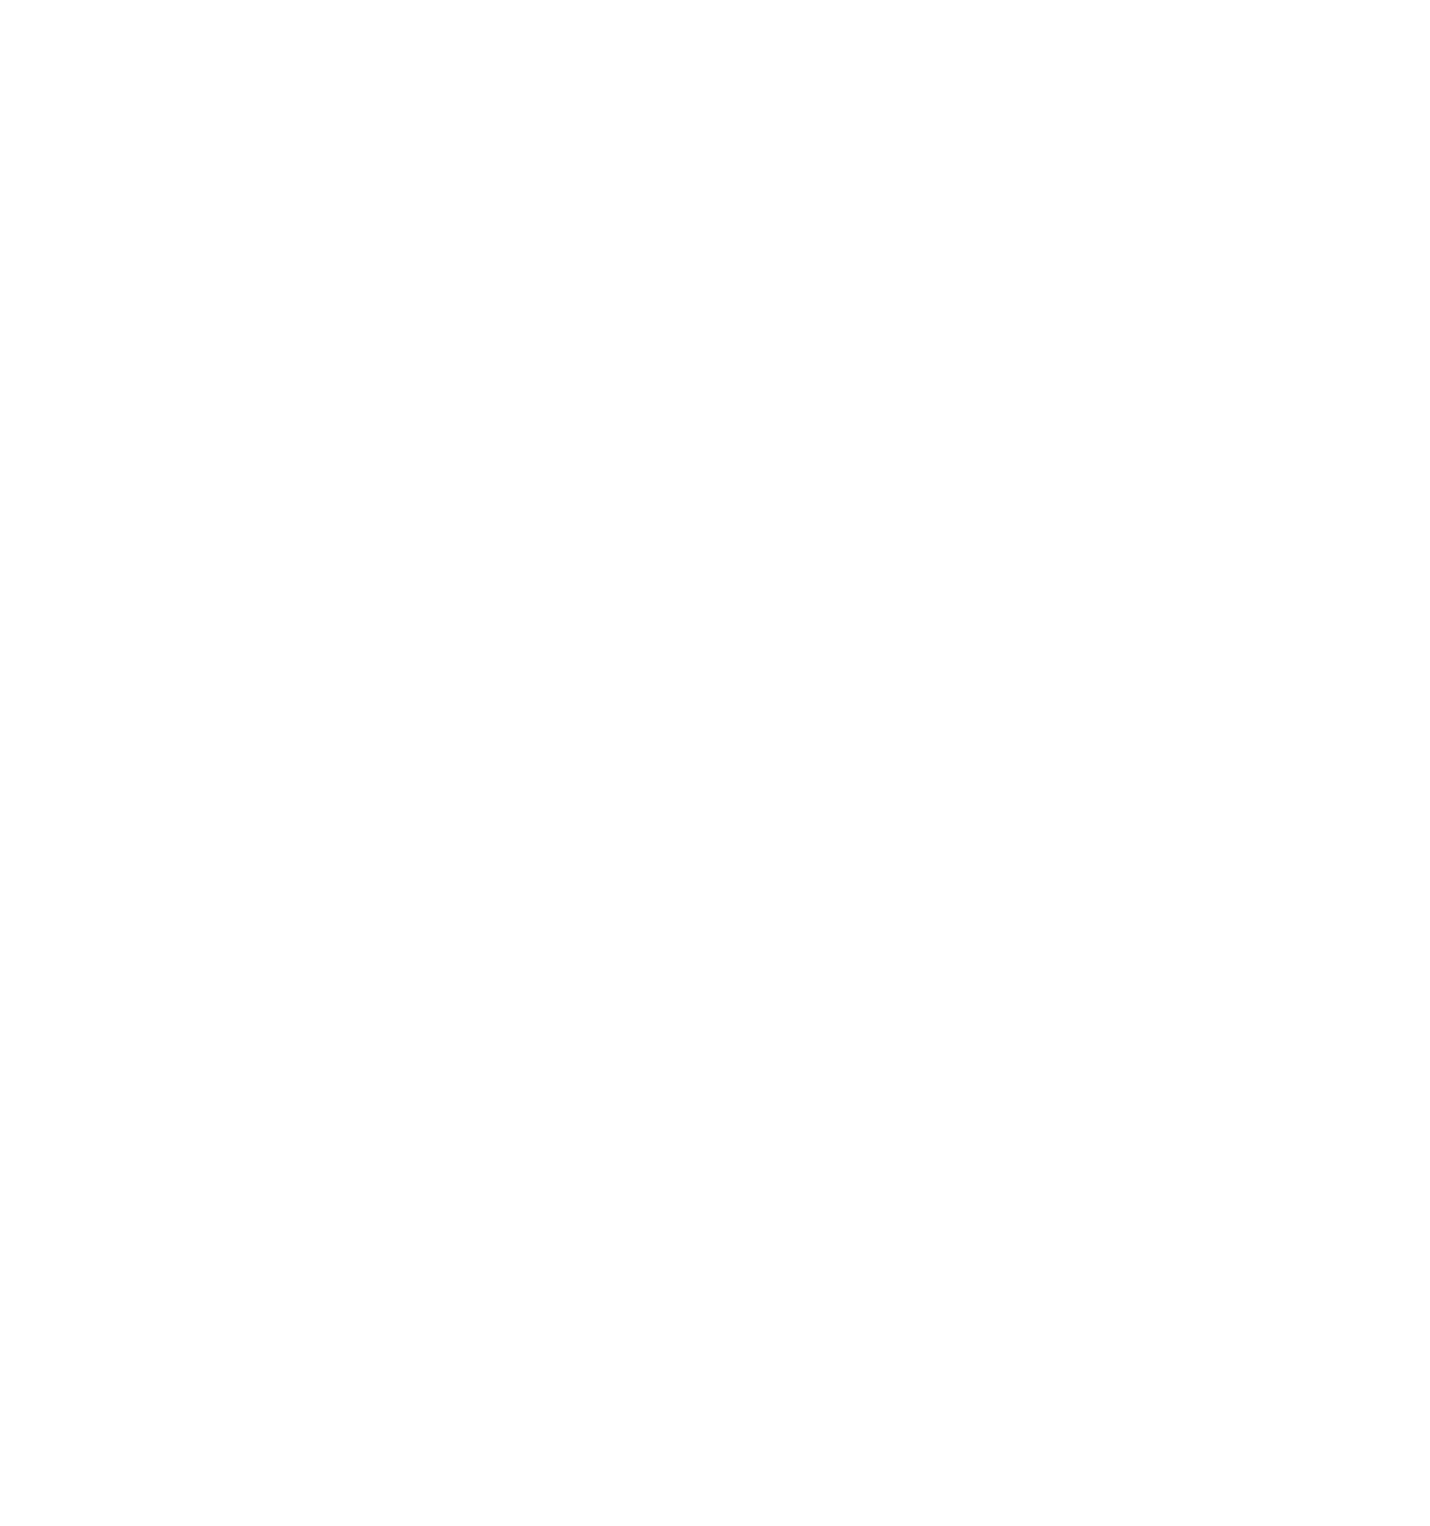 Gimv NV logo pour fonds sombres (PNG transparent)